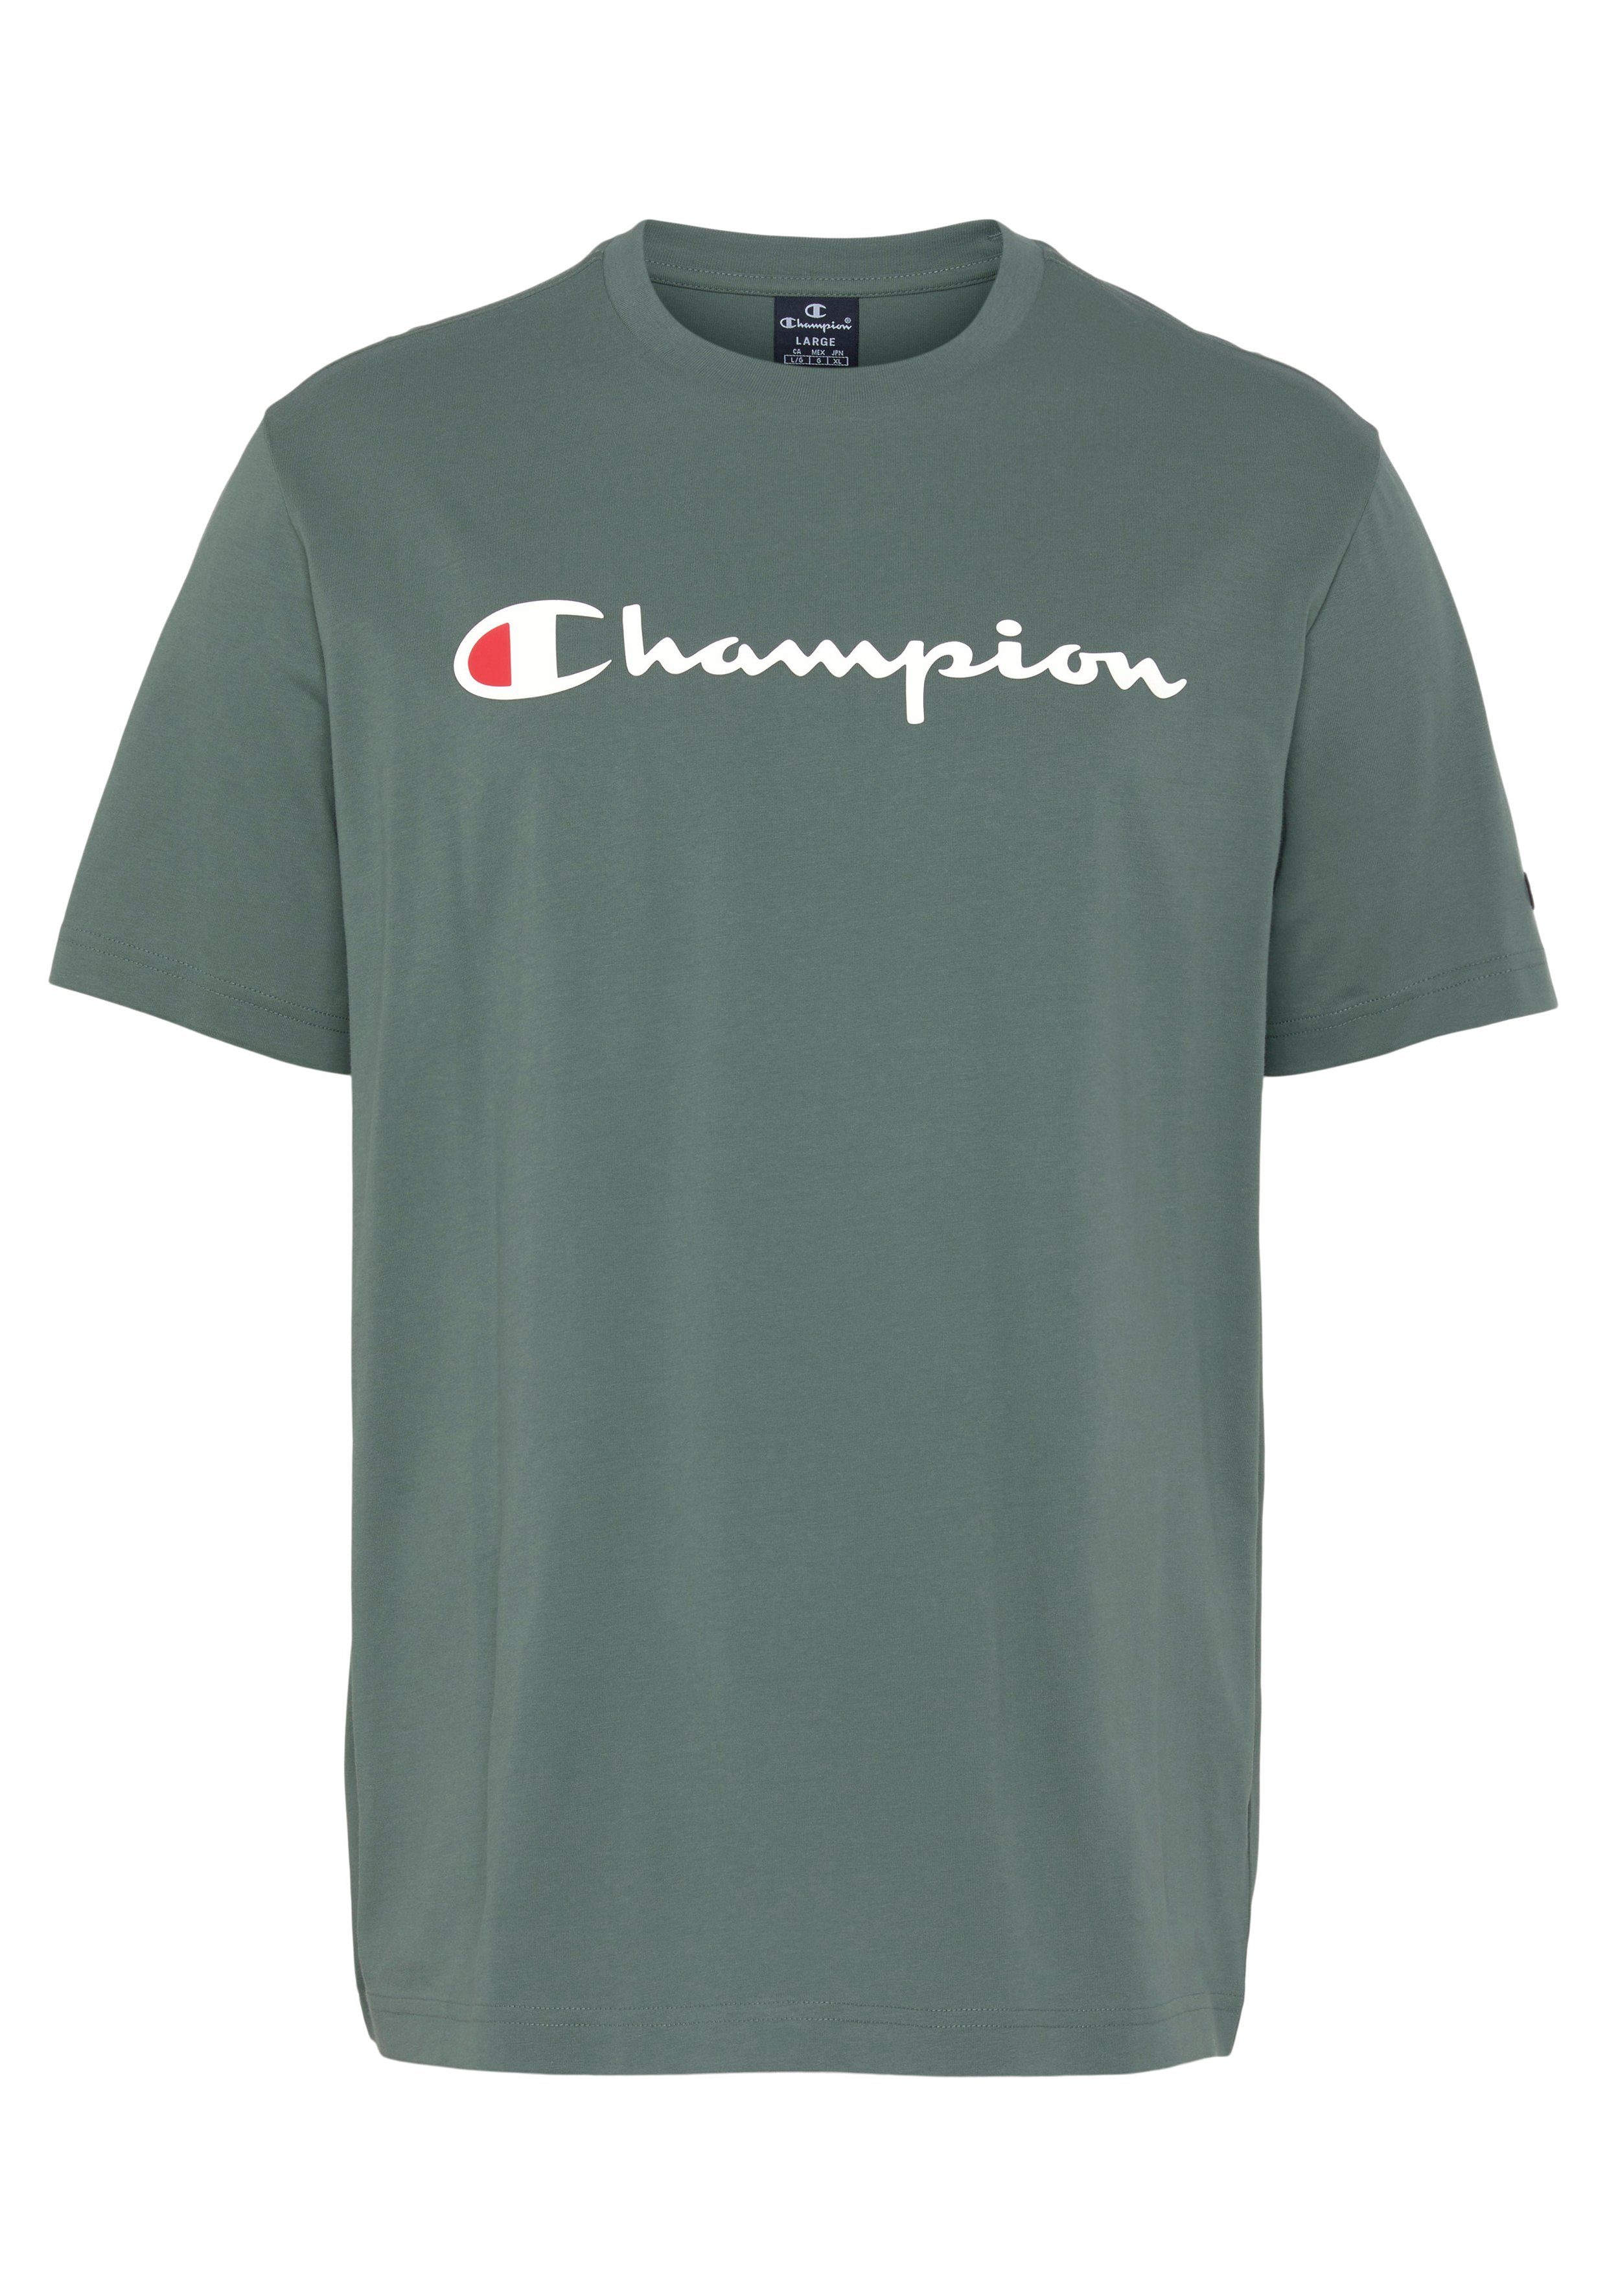 Champion T-Shirt Classic Crewneck Oliv large Logo T-Shirt